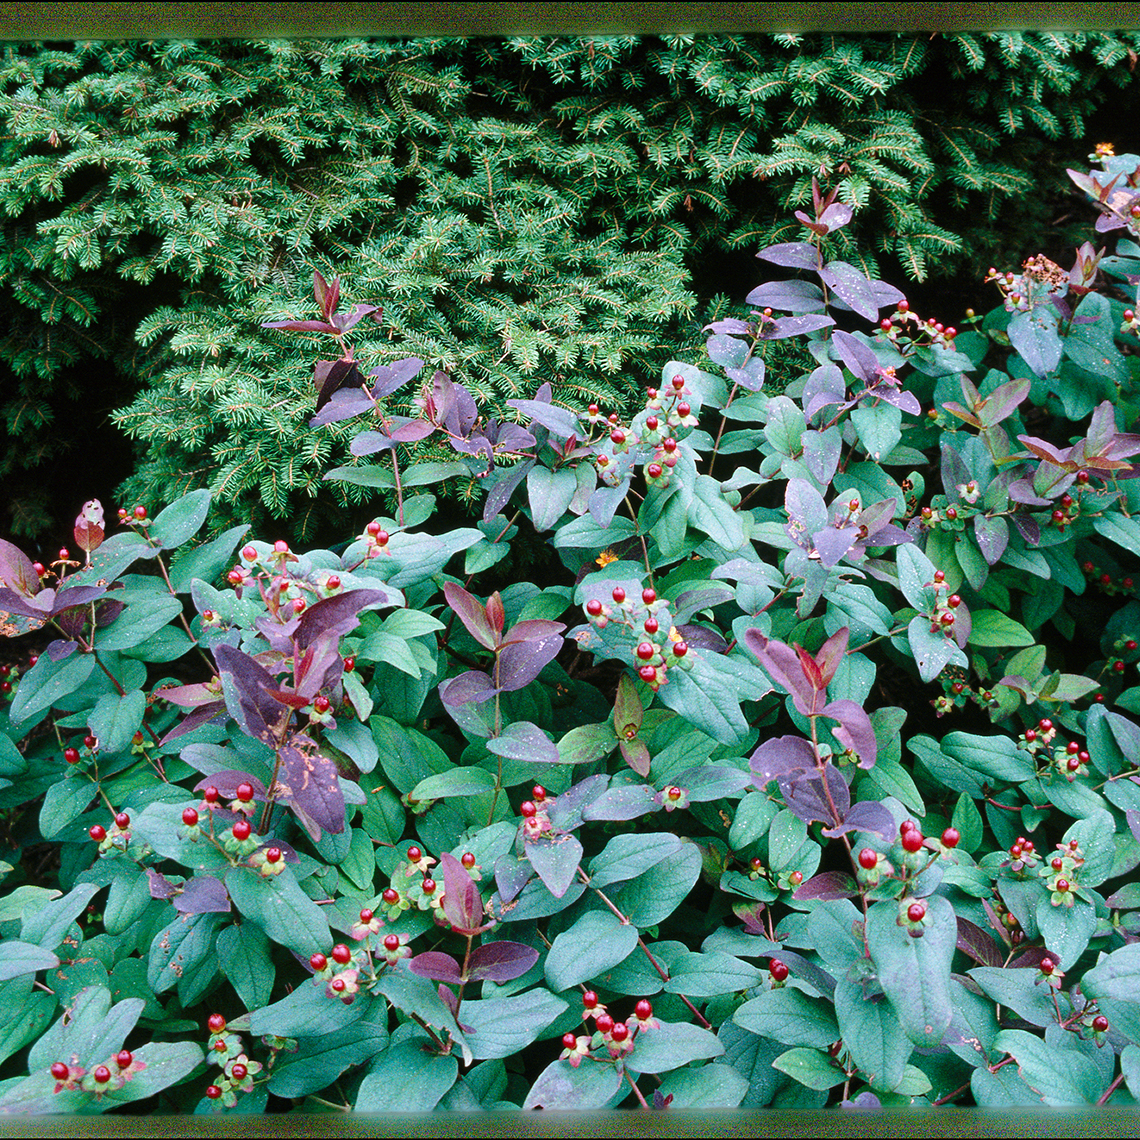 The blue and purple foliage of Albury Purple hypericum